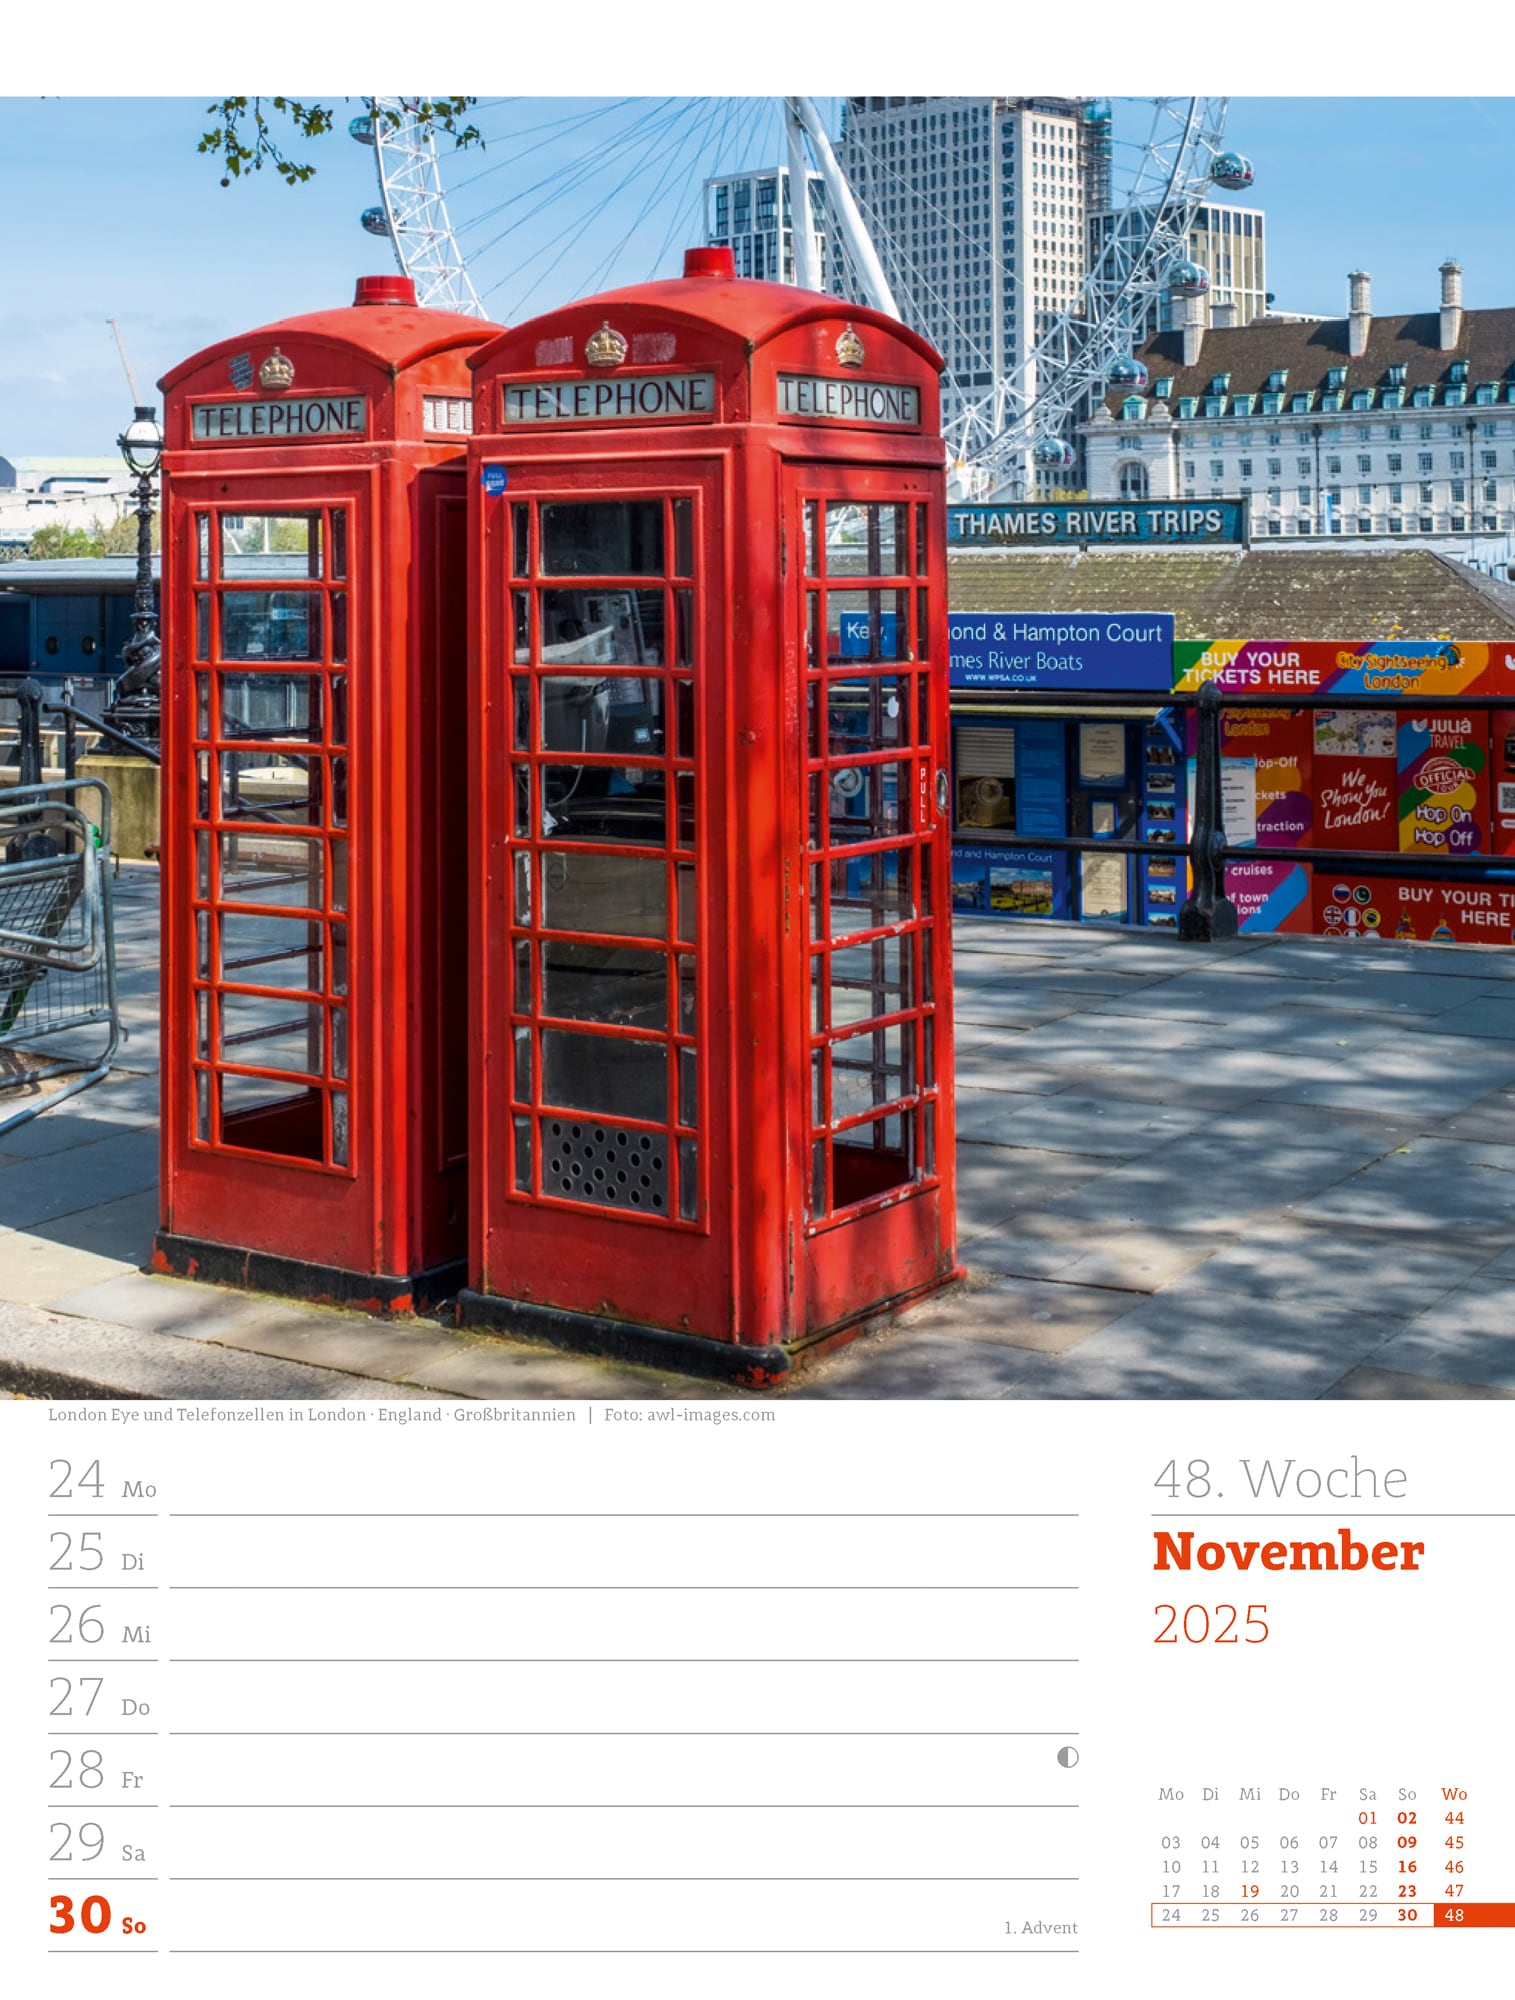 Ackermann Calendar Travel the World 2025 - Weekly Planner - Inside View 51